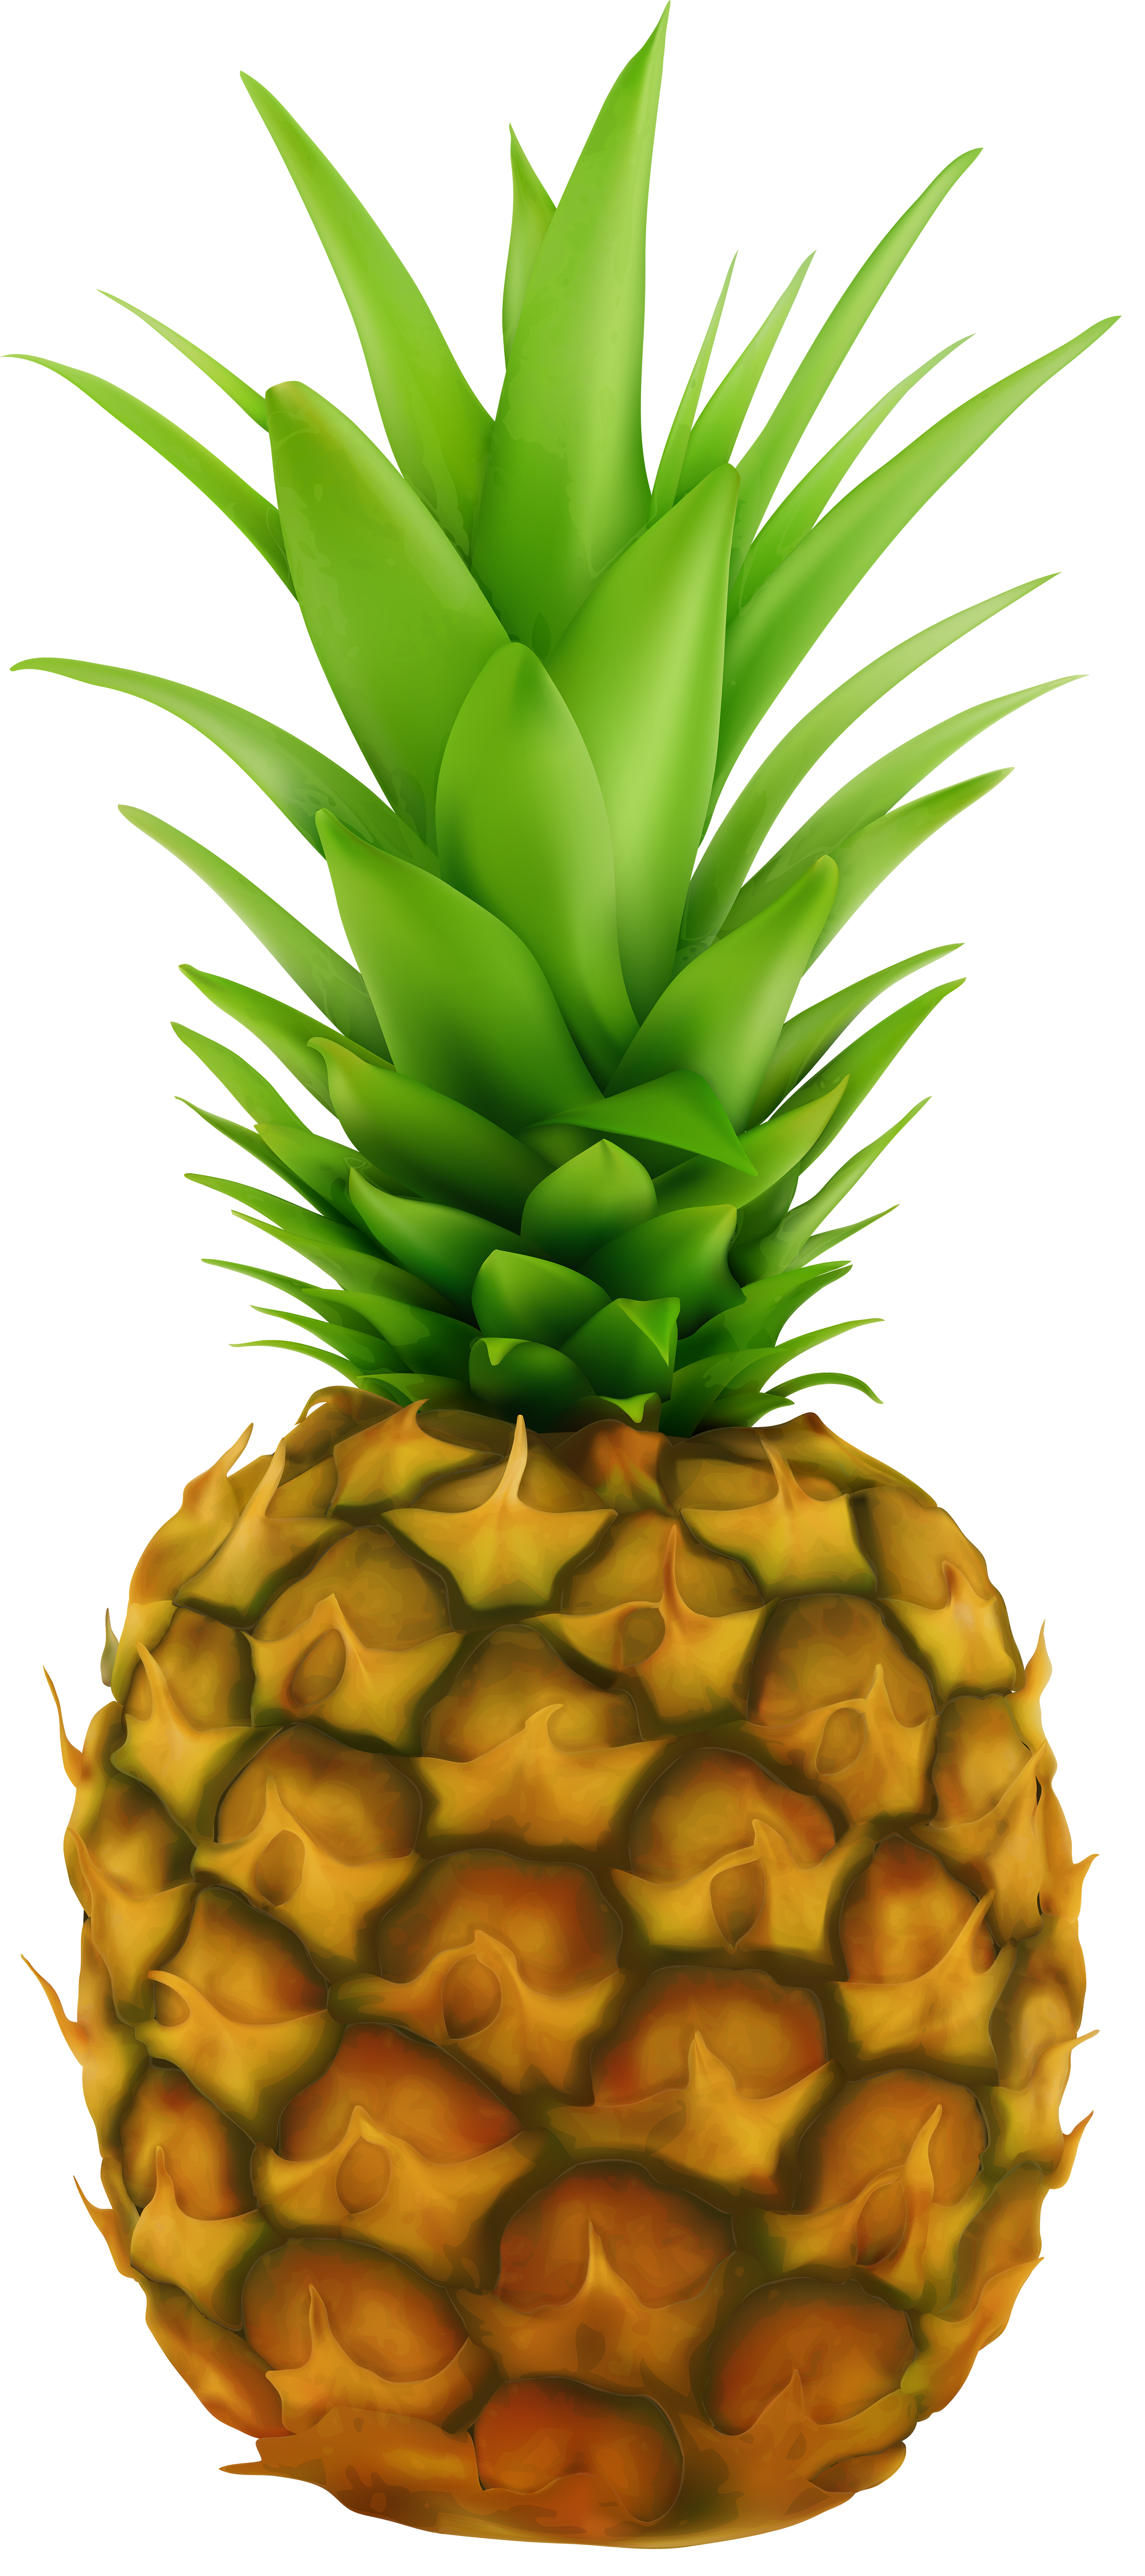 Pineapple Transparent Clip Art Image | Gallery ...